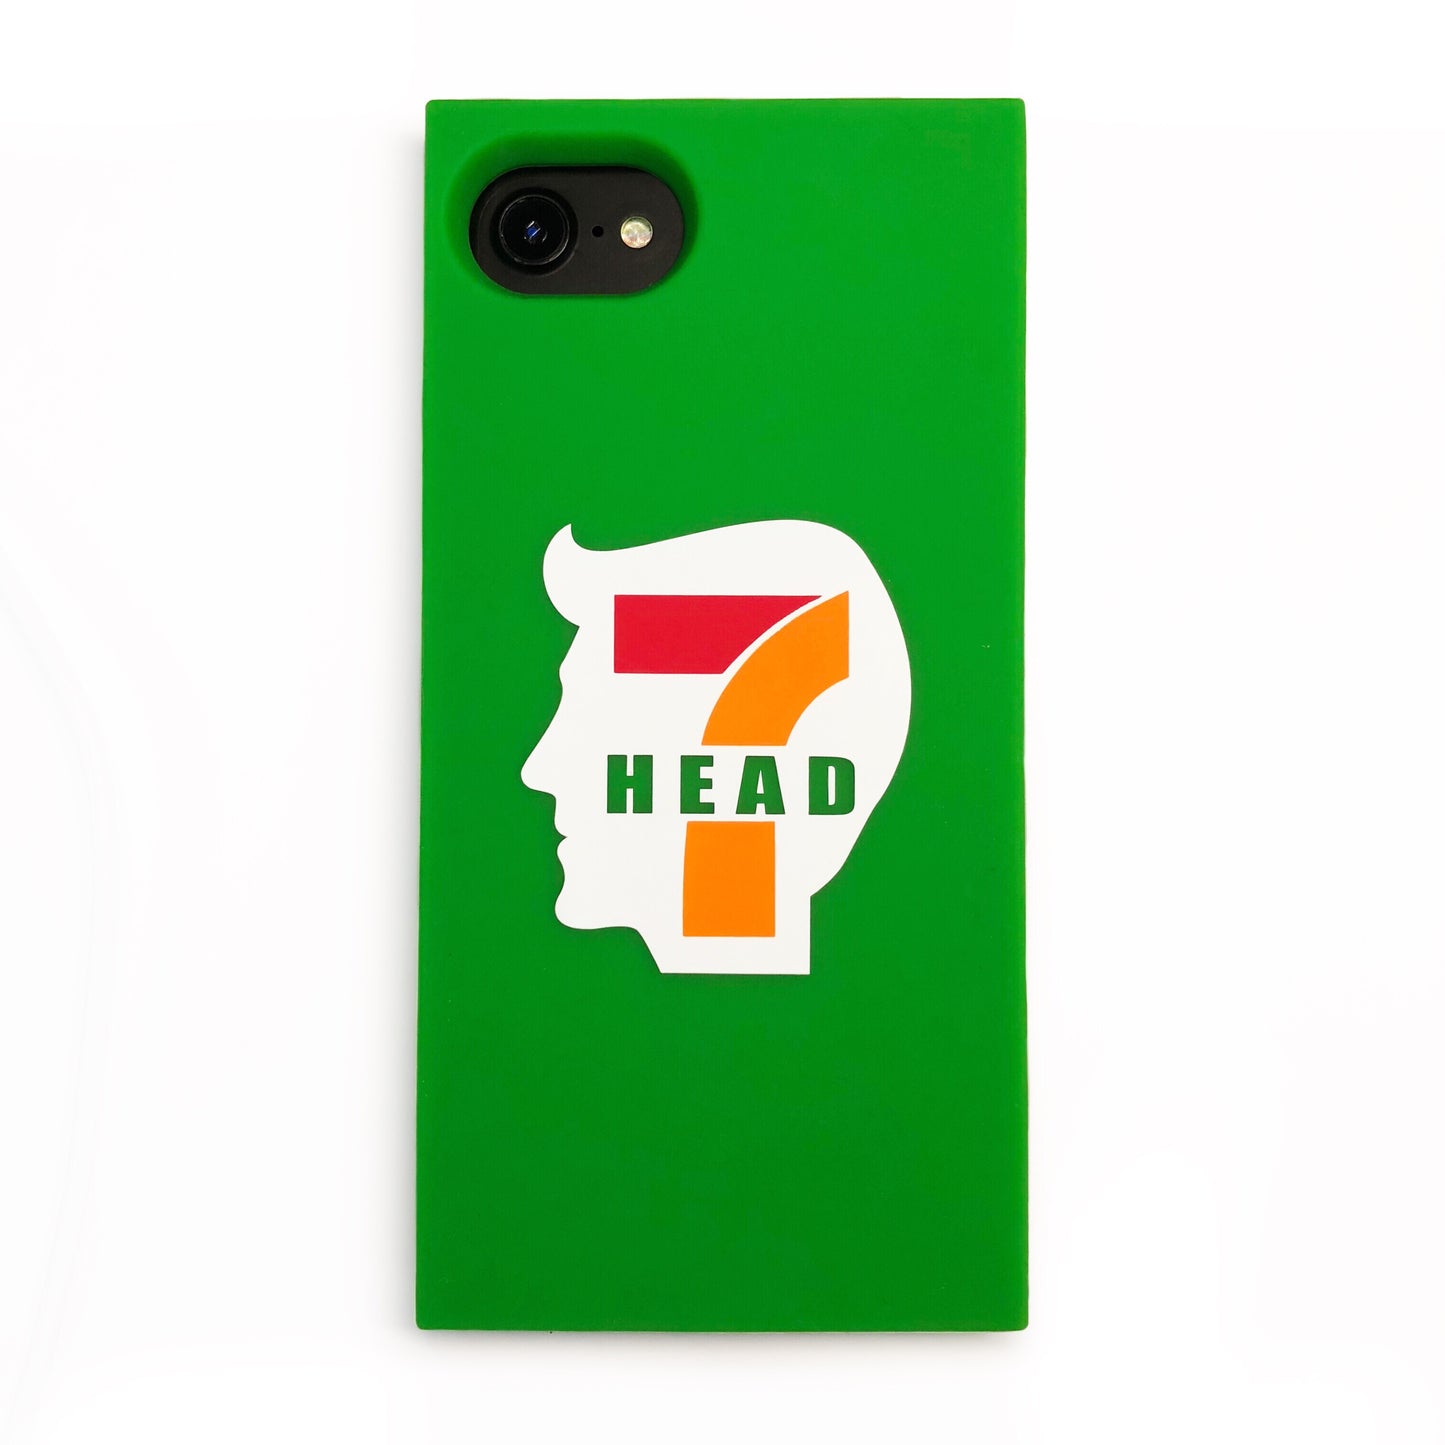 iPhone SE/7/8 Parody Simple Case - 7 Head